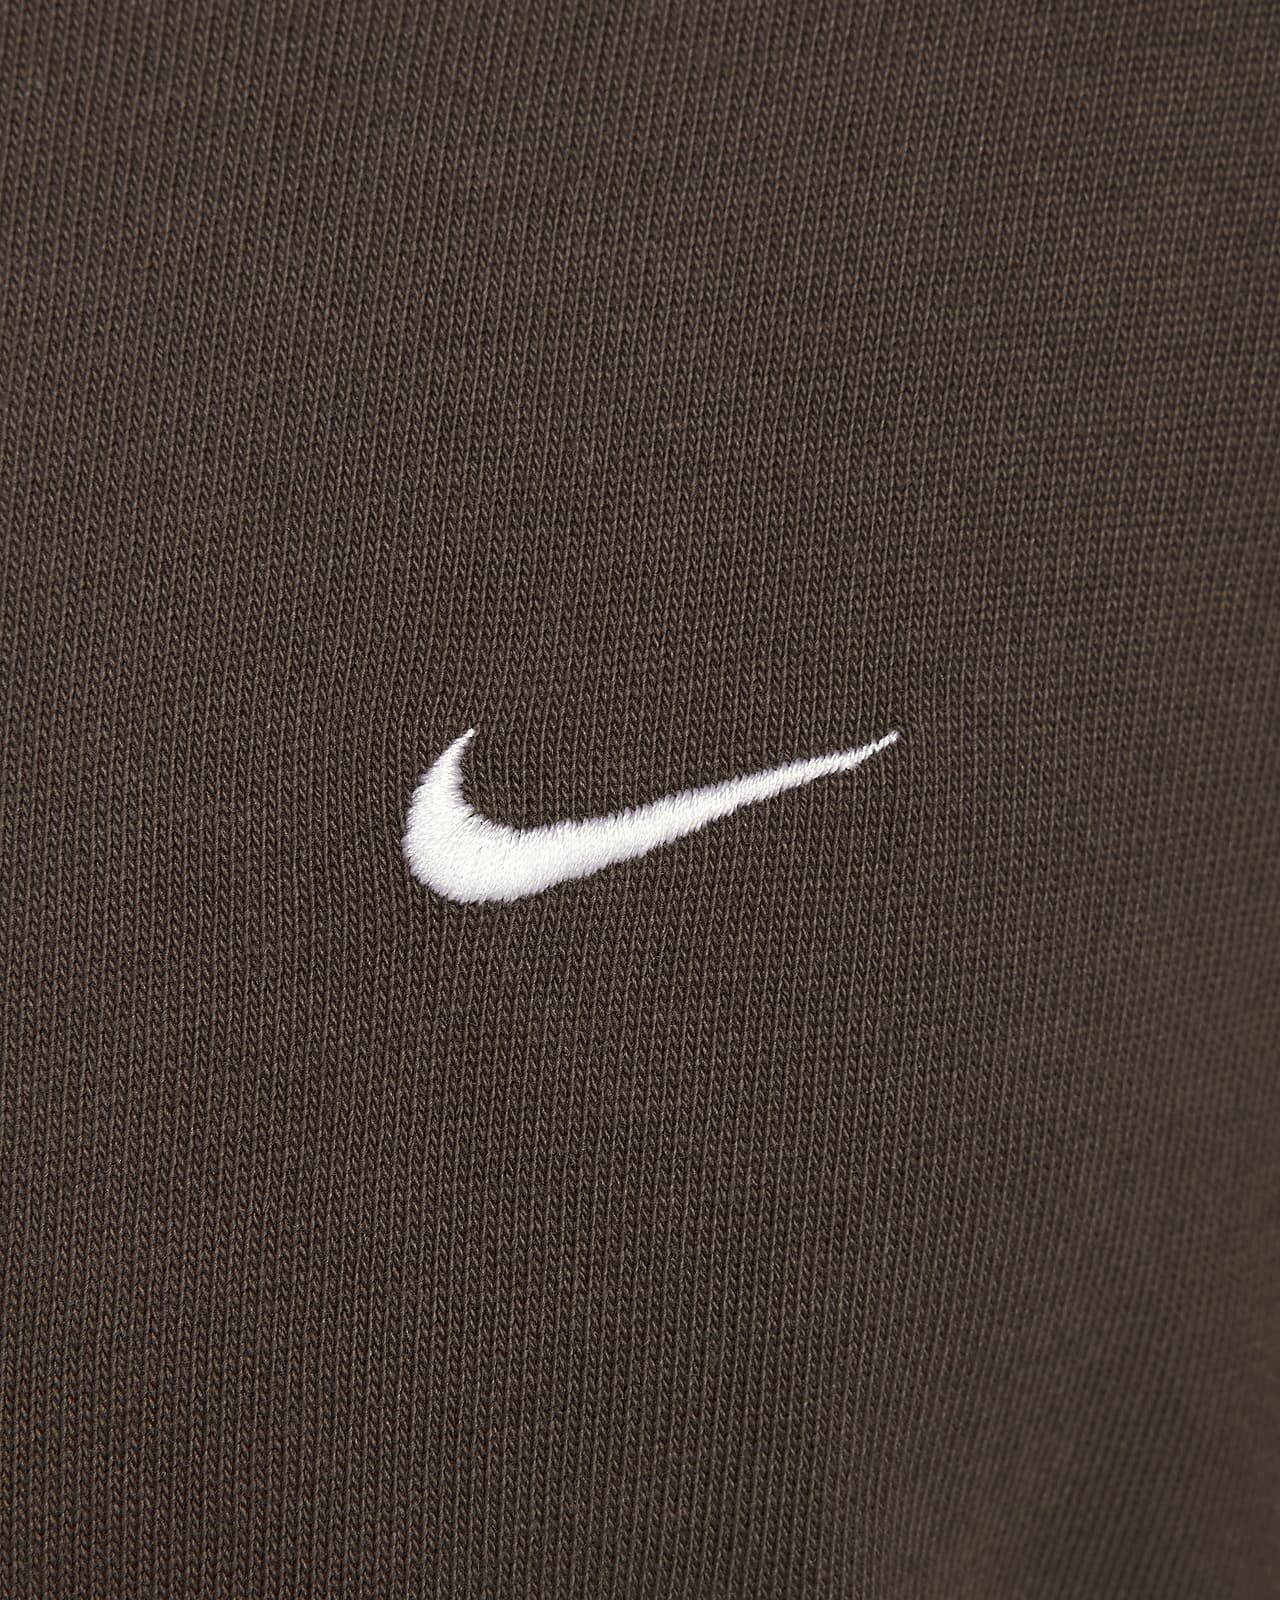 Nike Solo Swoosh Men's Long-Sleeve Top.